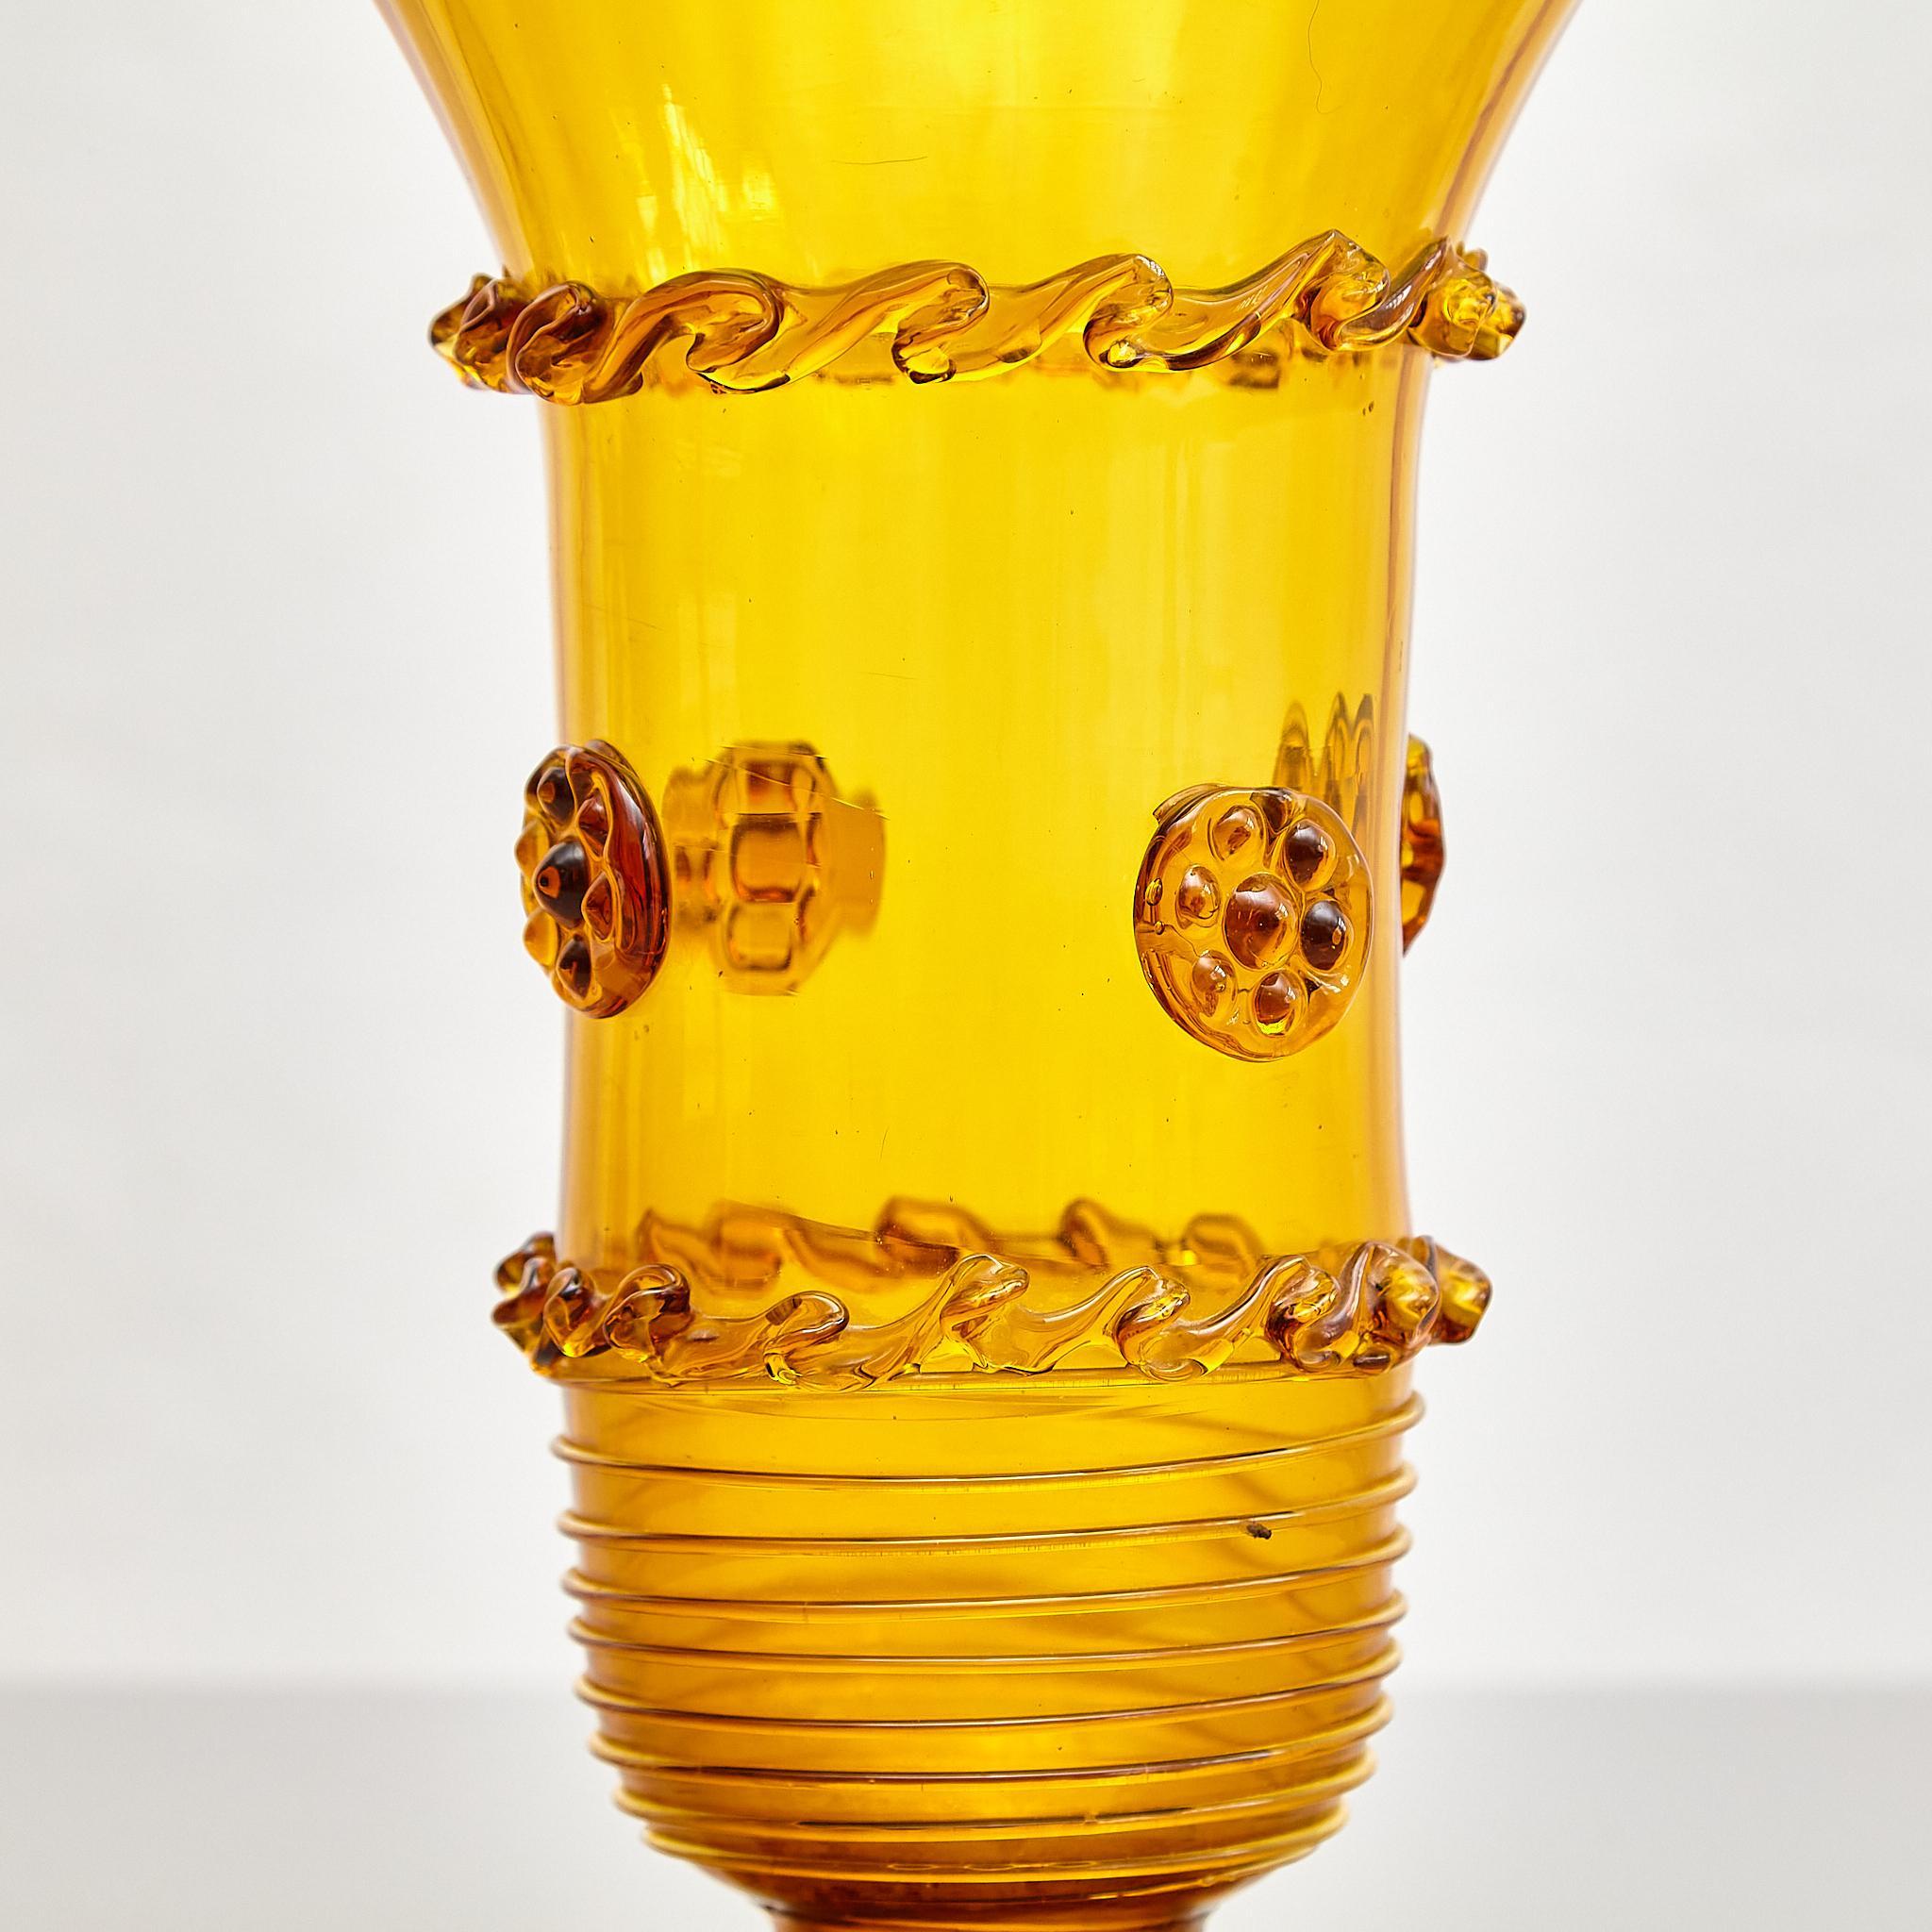 Elegant Amber Blown Glass Vase - Early 20th Century Spanish Artistry For Sale 4